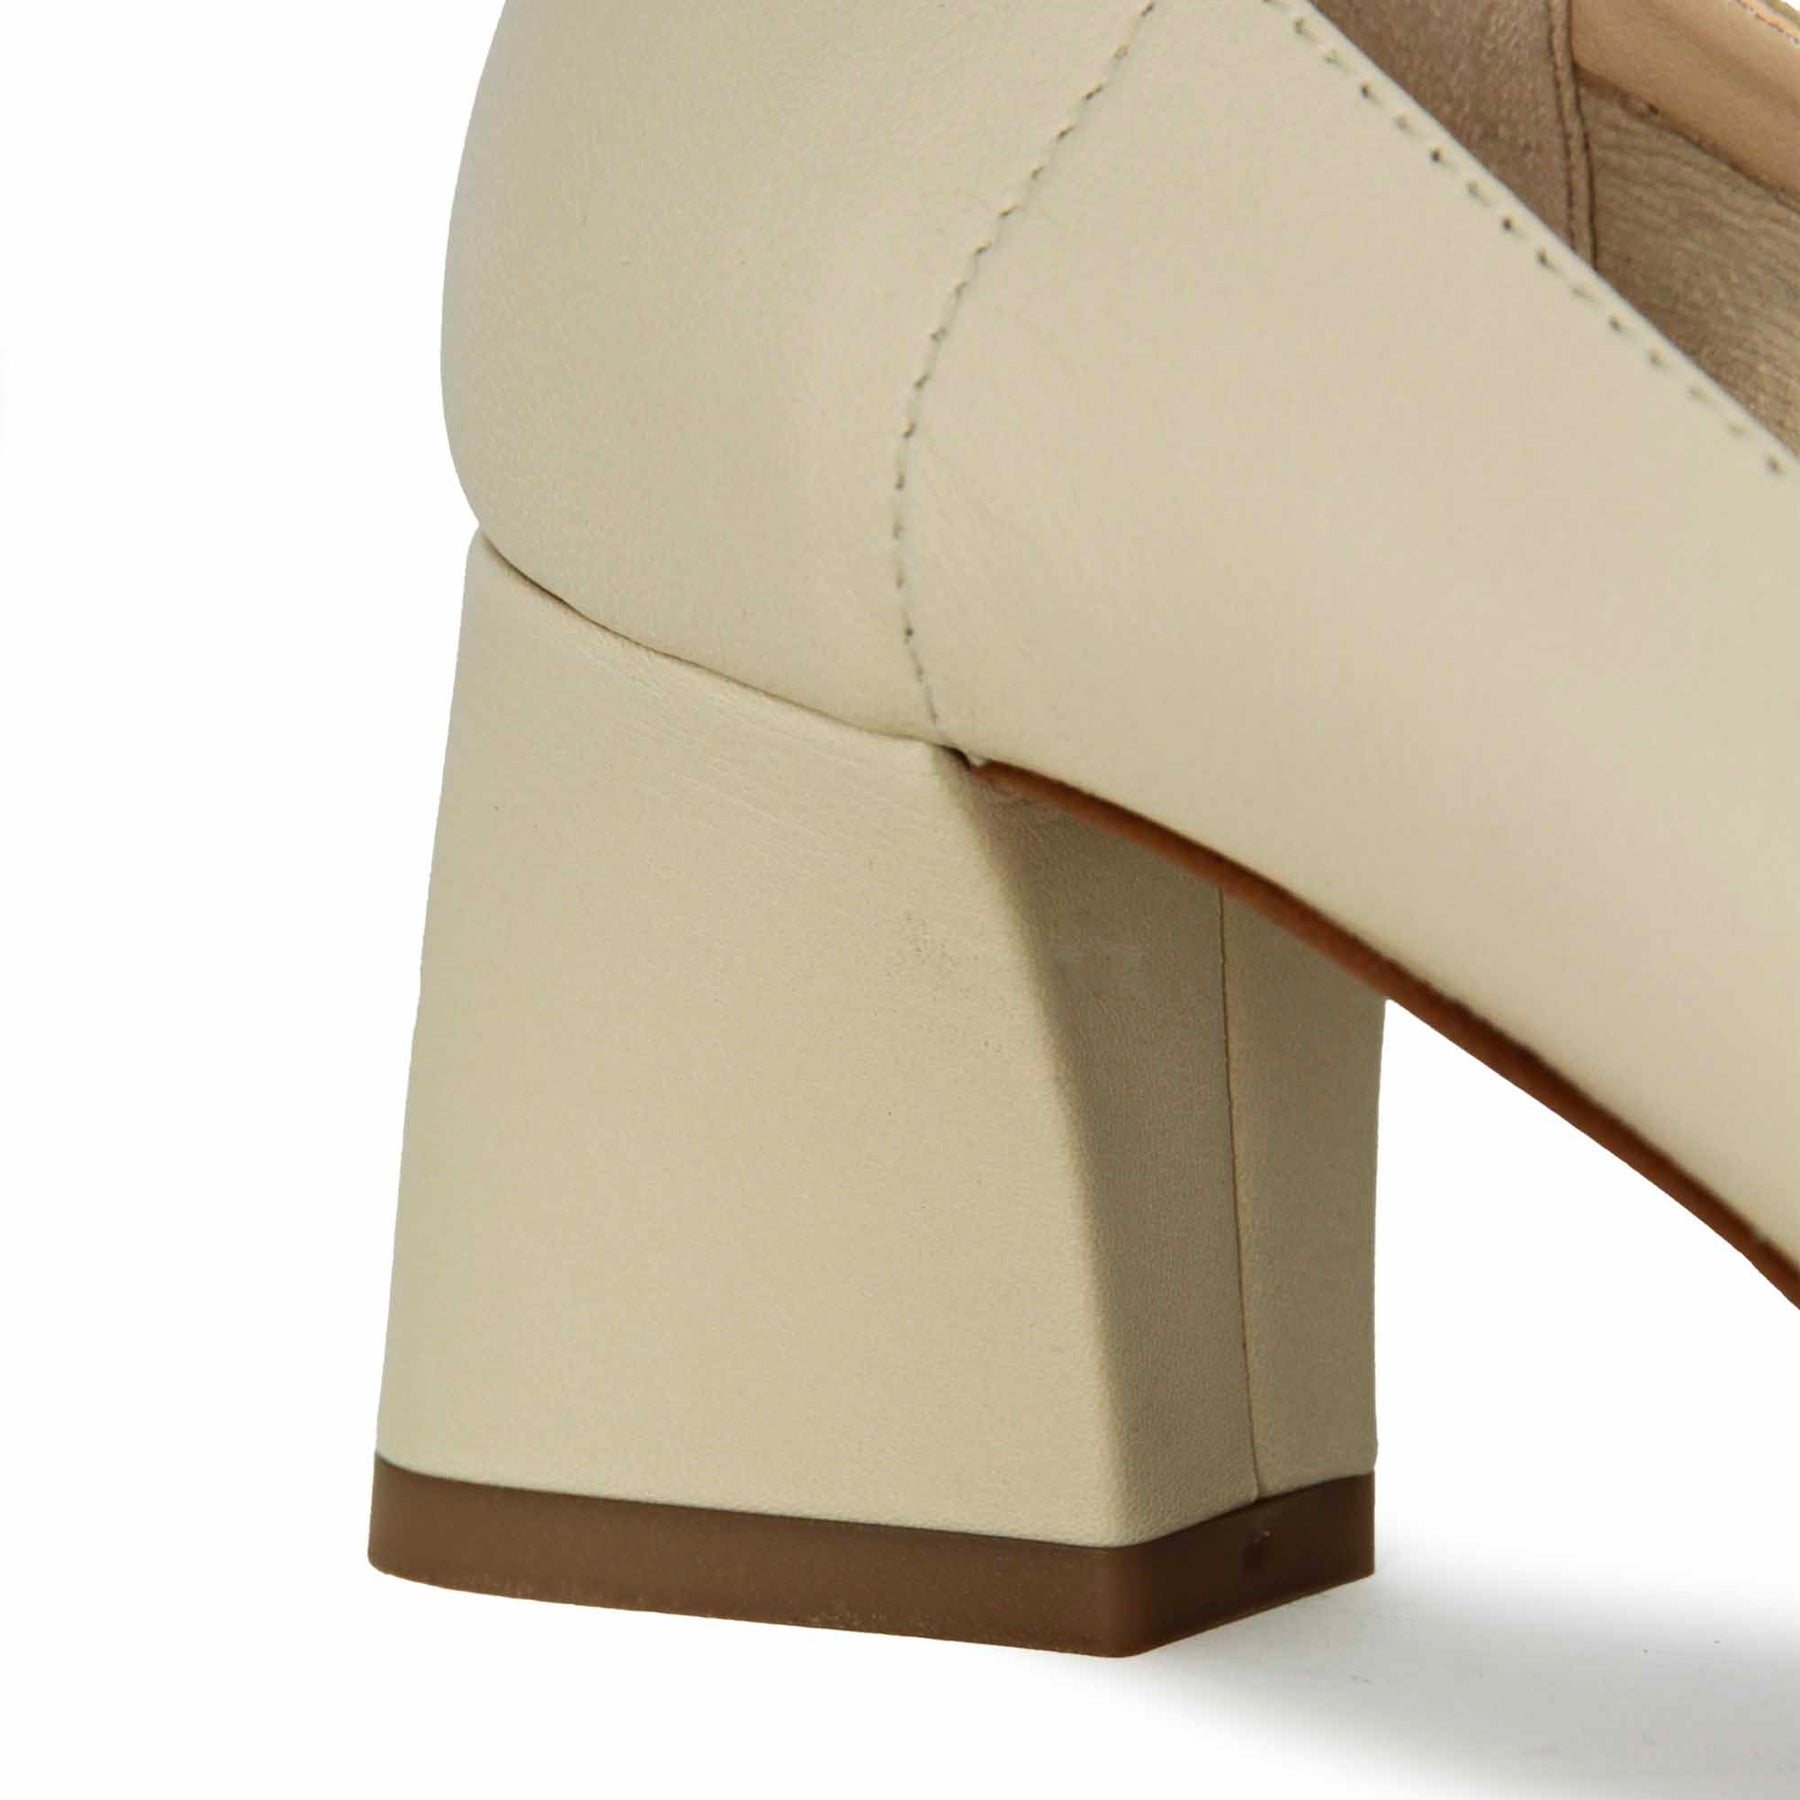 Women's décolleté in beige leather with medium heel